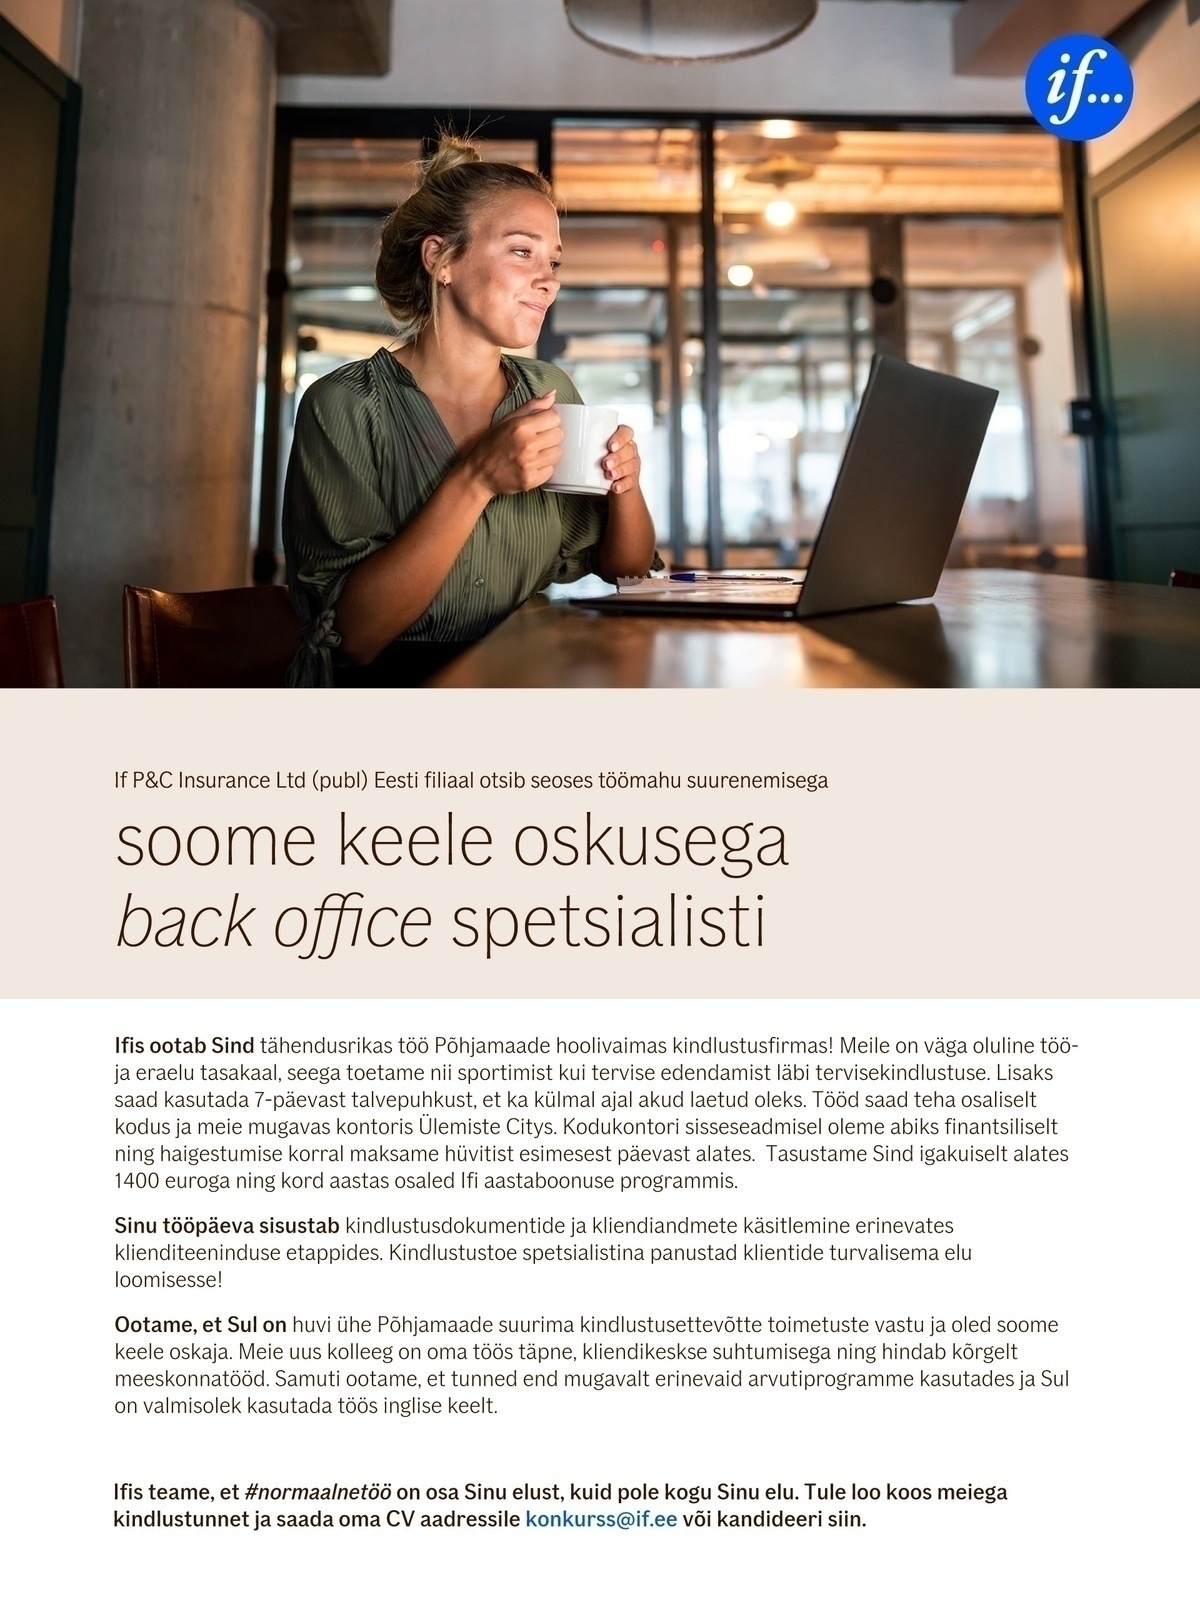 If P&C Insurance Ltd (publ) Eesti filiaal Soome keele oskusega back office spetsialist